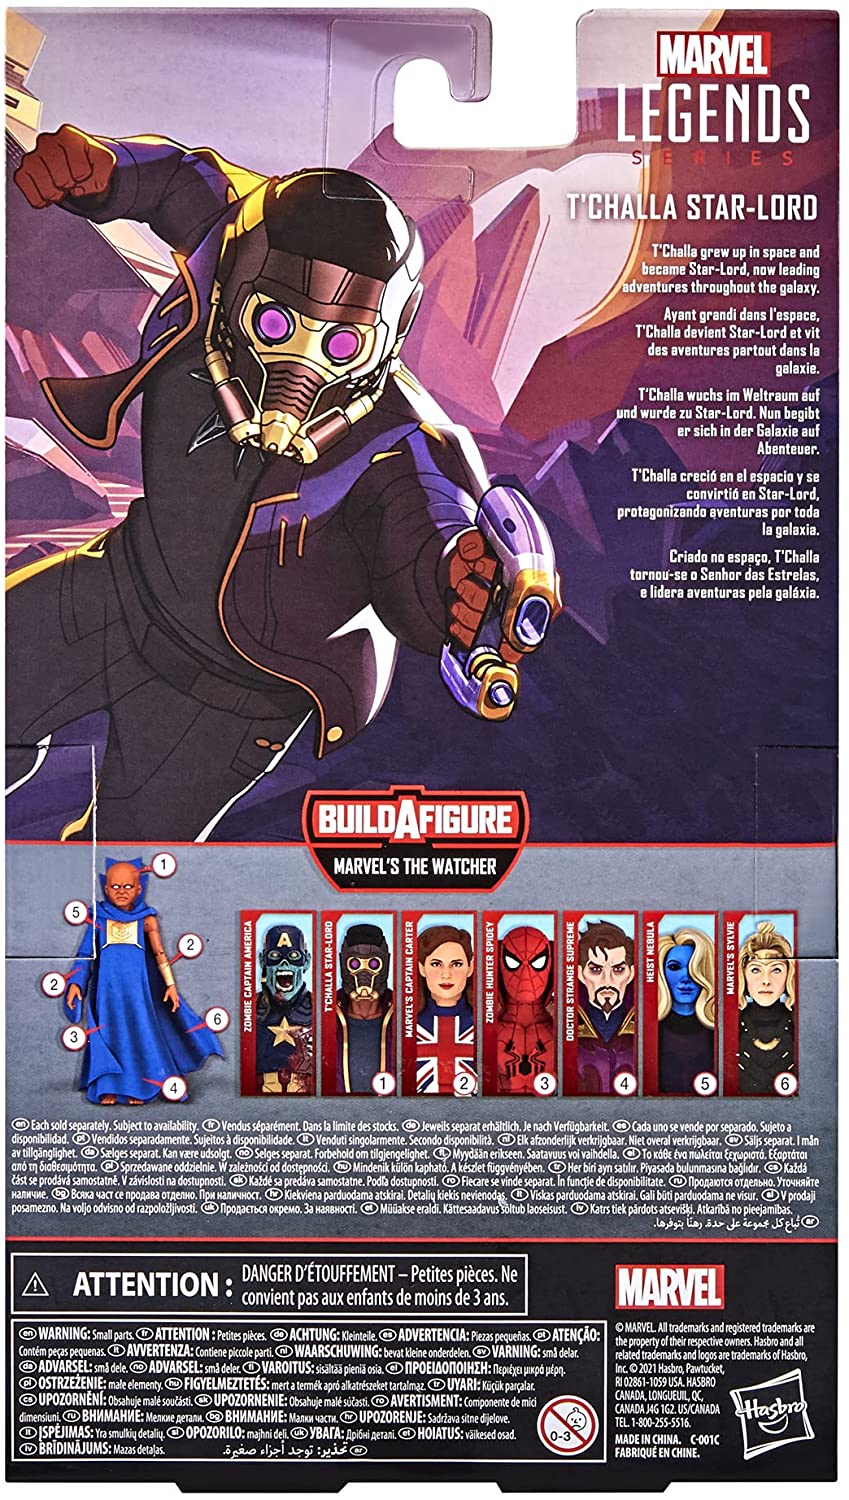 Marvel Legends Series 15 cm Scale Action Figure Toy T'Challa Star-Lord, Premium Design, 1 Figure, 3 Accessories, and Build-A-Figure Part, Multicolor